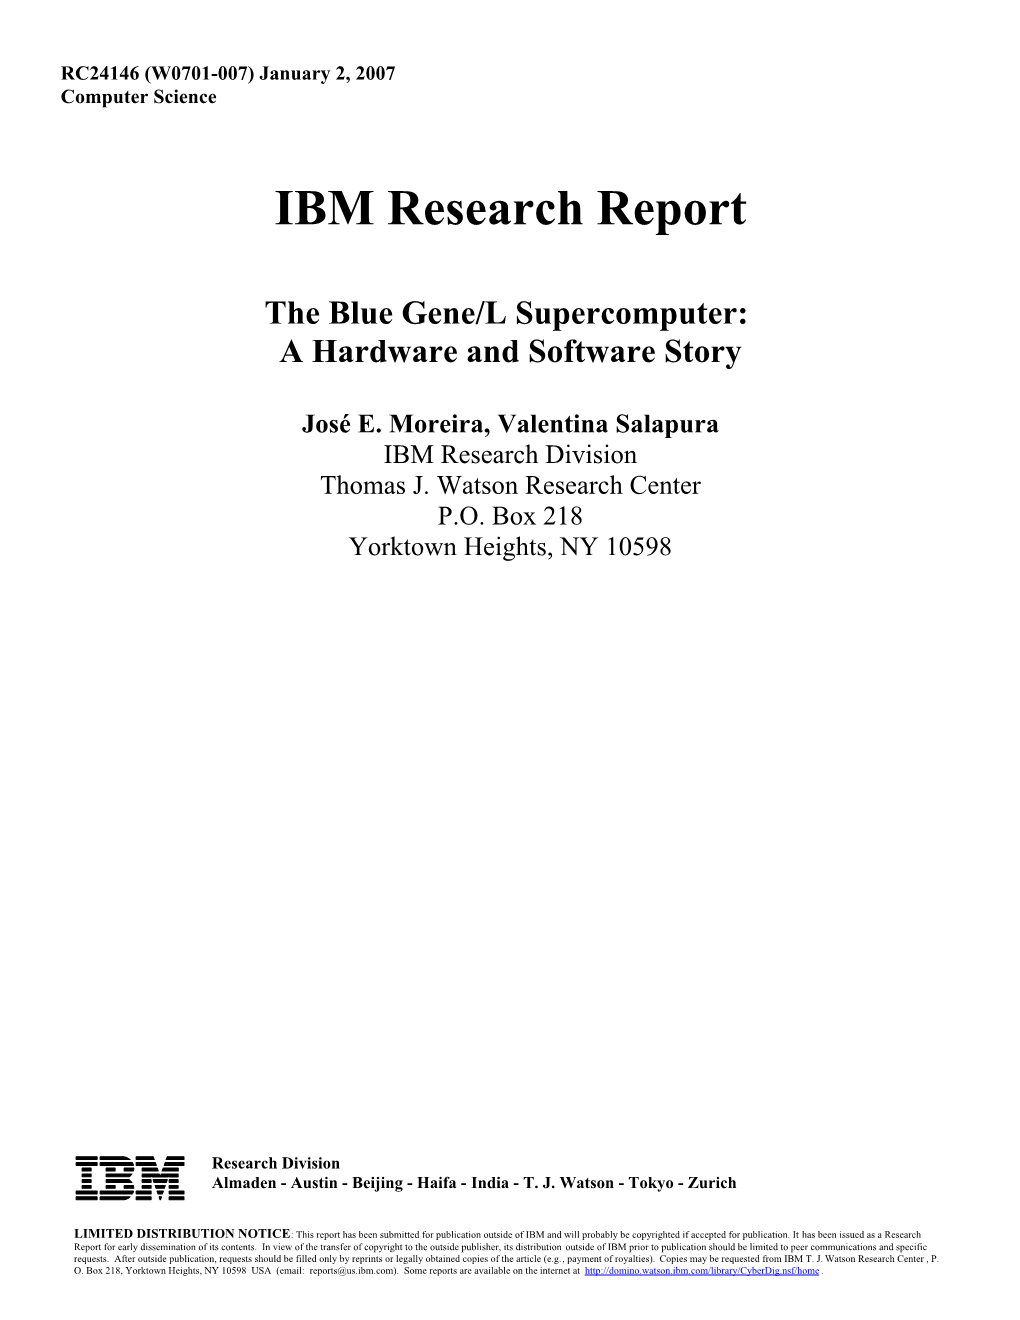 IBM Research Report the Blue Gene/L Supercomputer